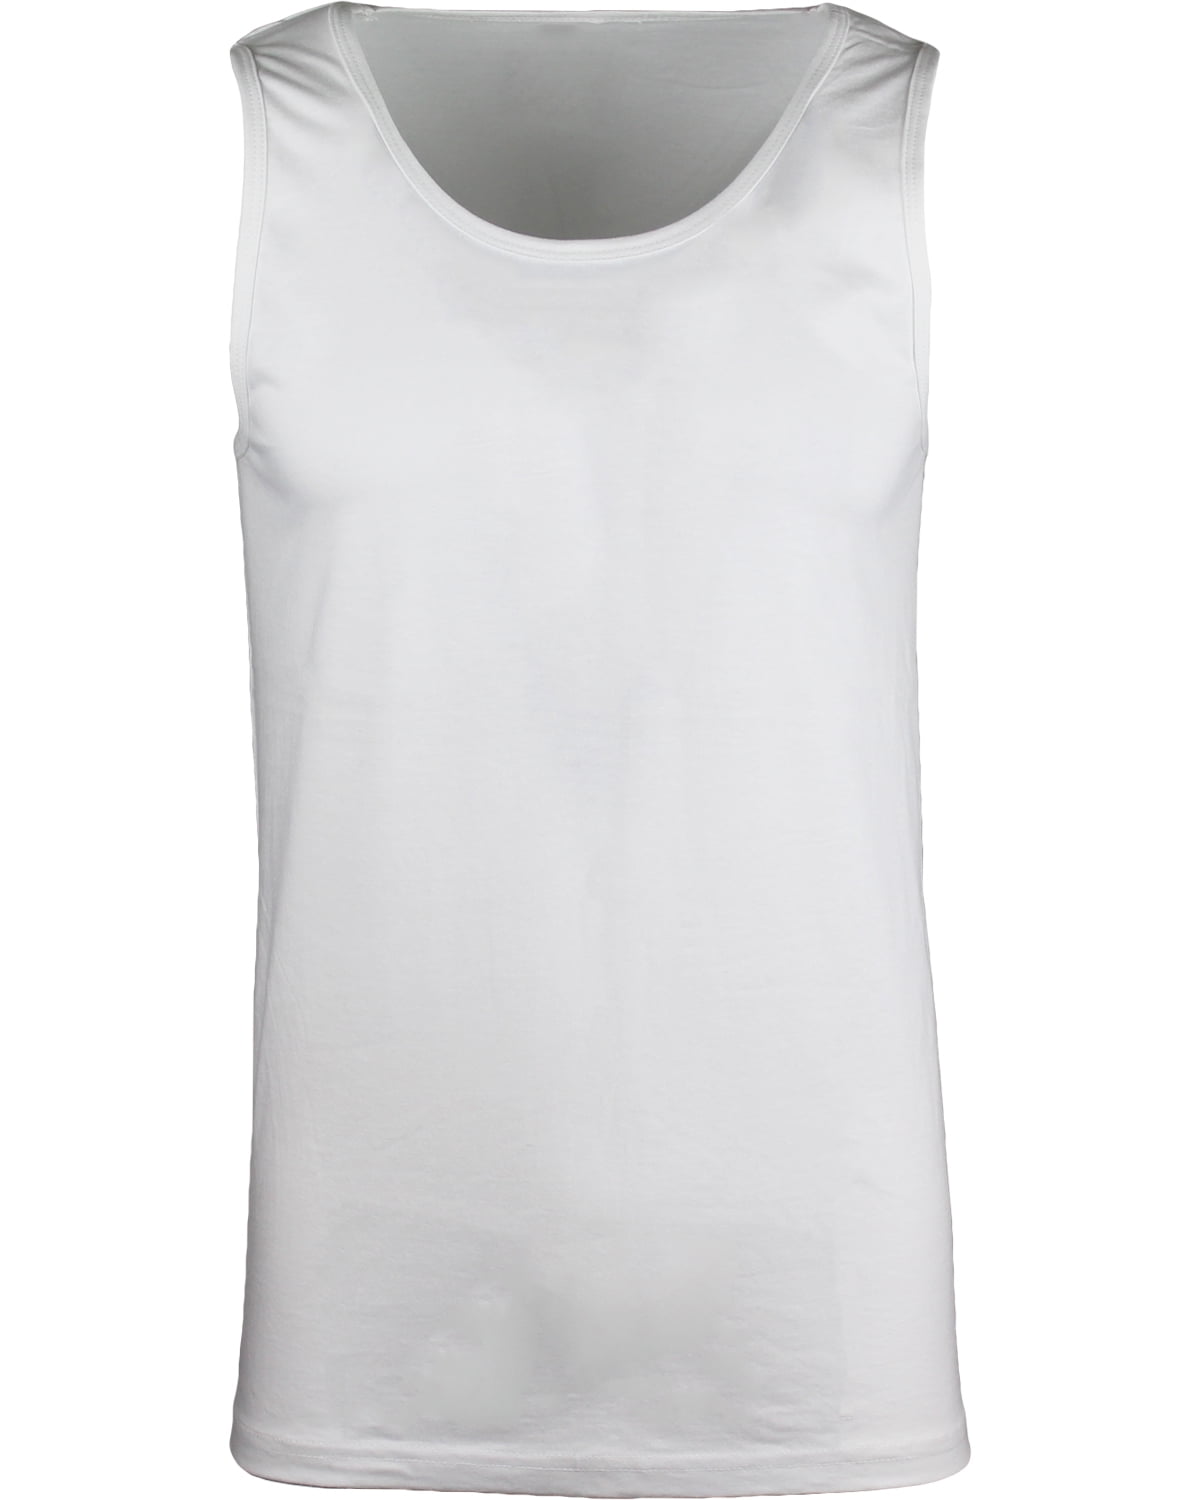 ShirtBANC - ShirtBANC Premium Mens Blank Tank Top Shirts Everyday Fresh ...